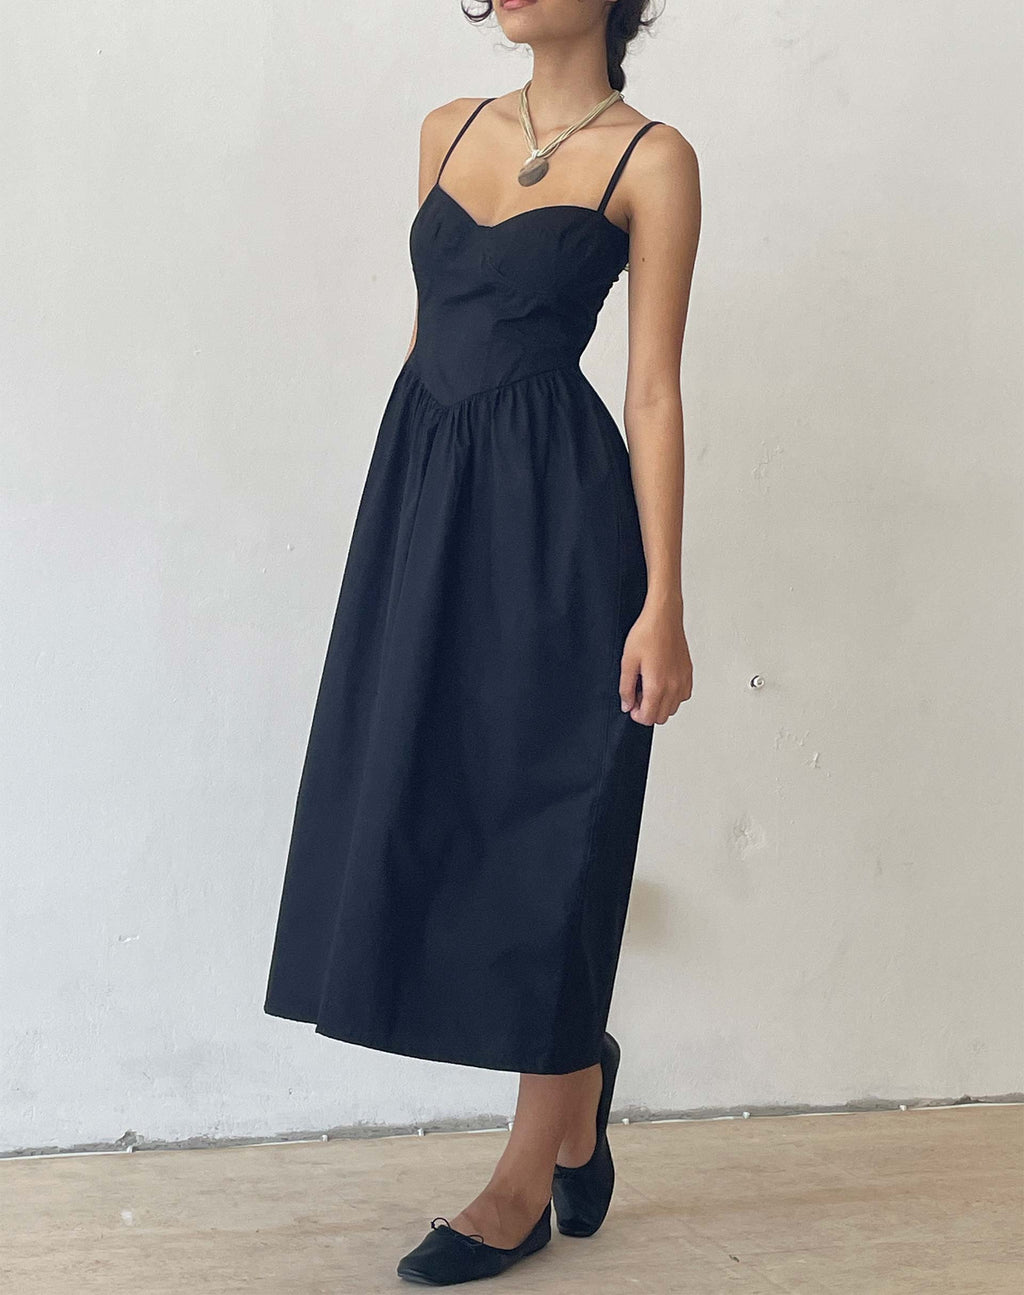 Clementine Corset Midi Dress in Black Poplin